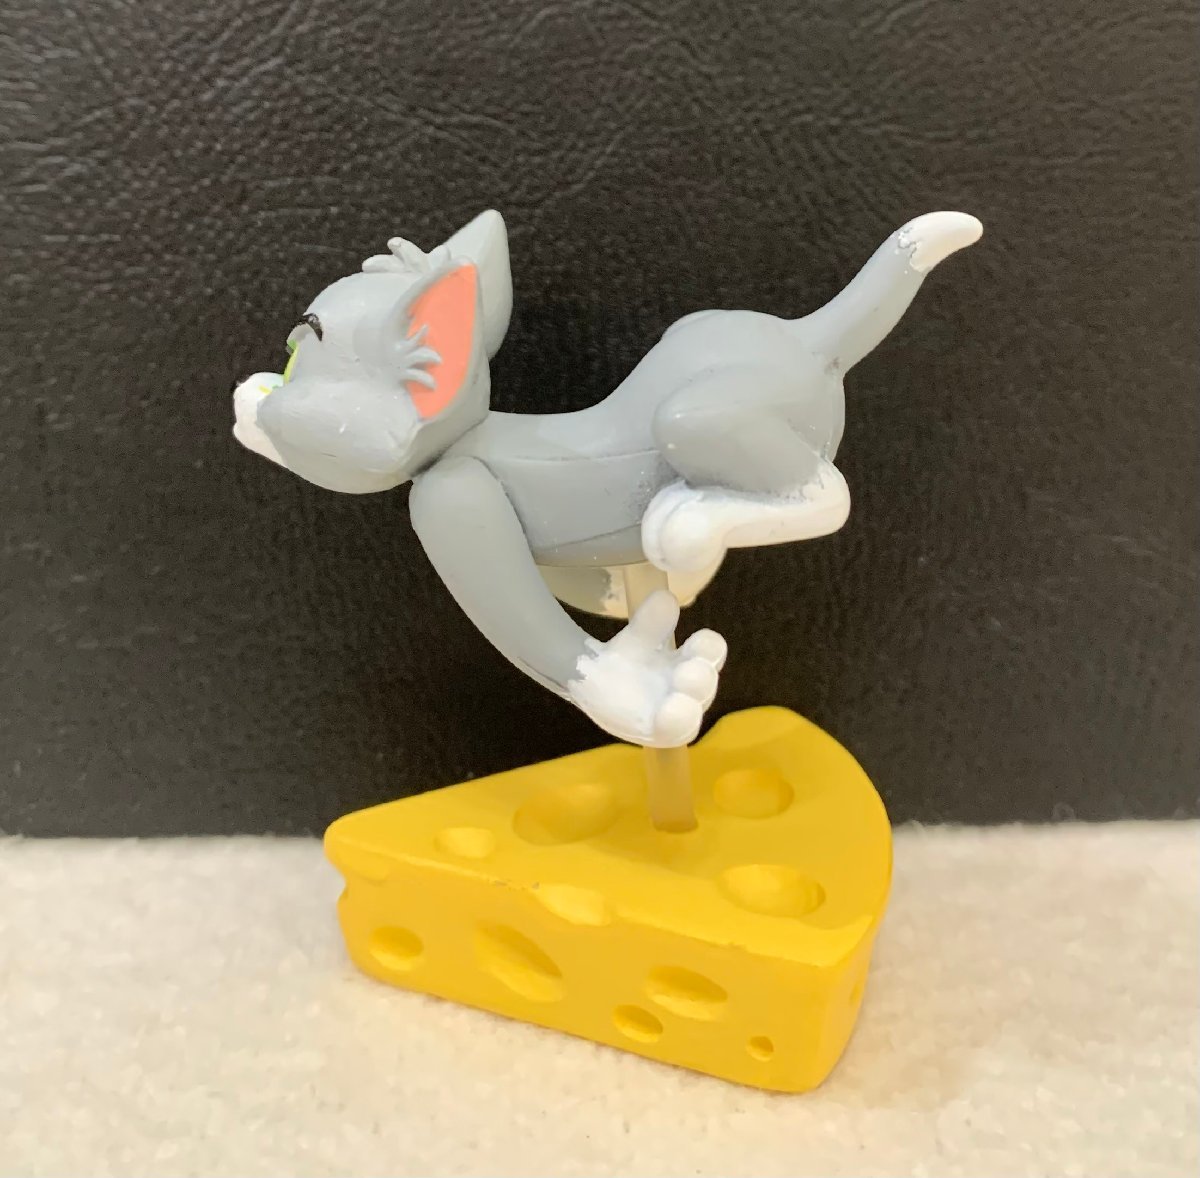 Tom runs with cheese [ Tom . Jerry LOVE CHEESE коллекция ] фигурка * размер примерно 4.5cm(wb